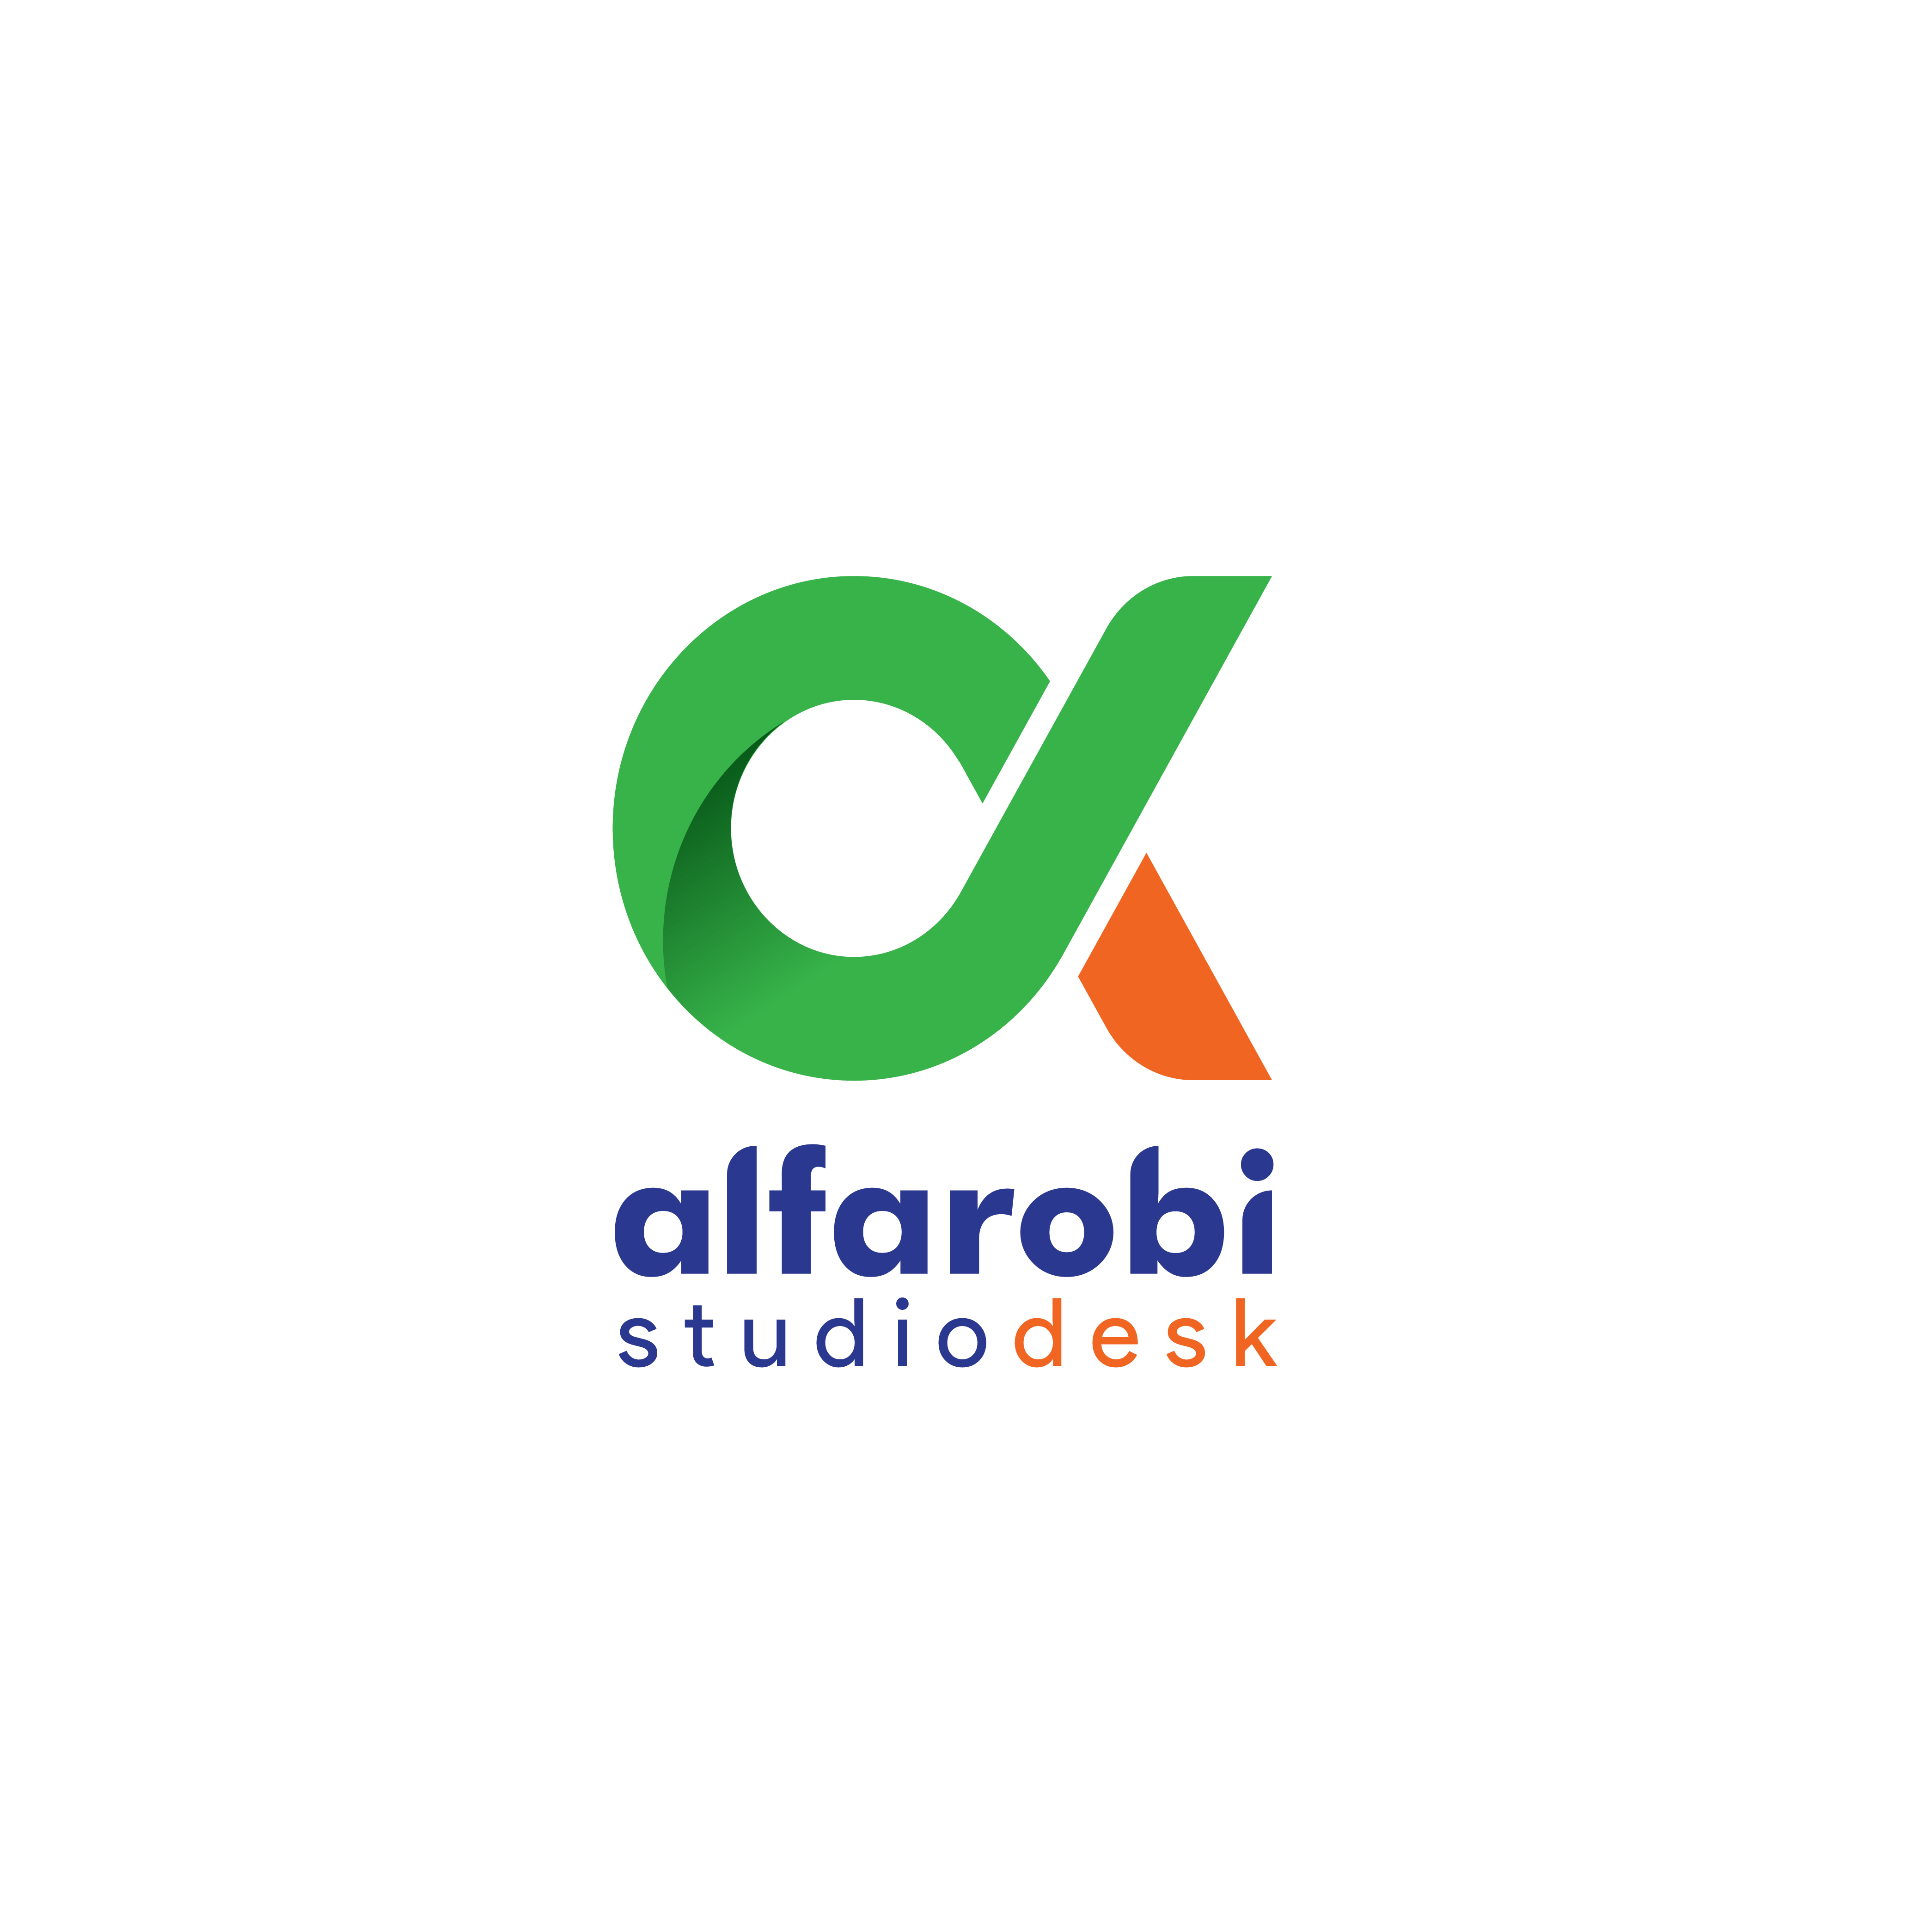 Alfarobi Studiodesk